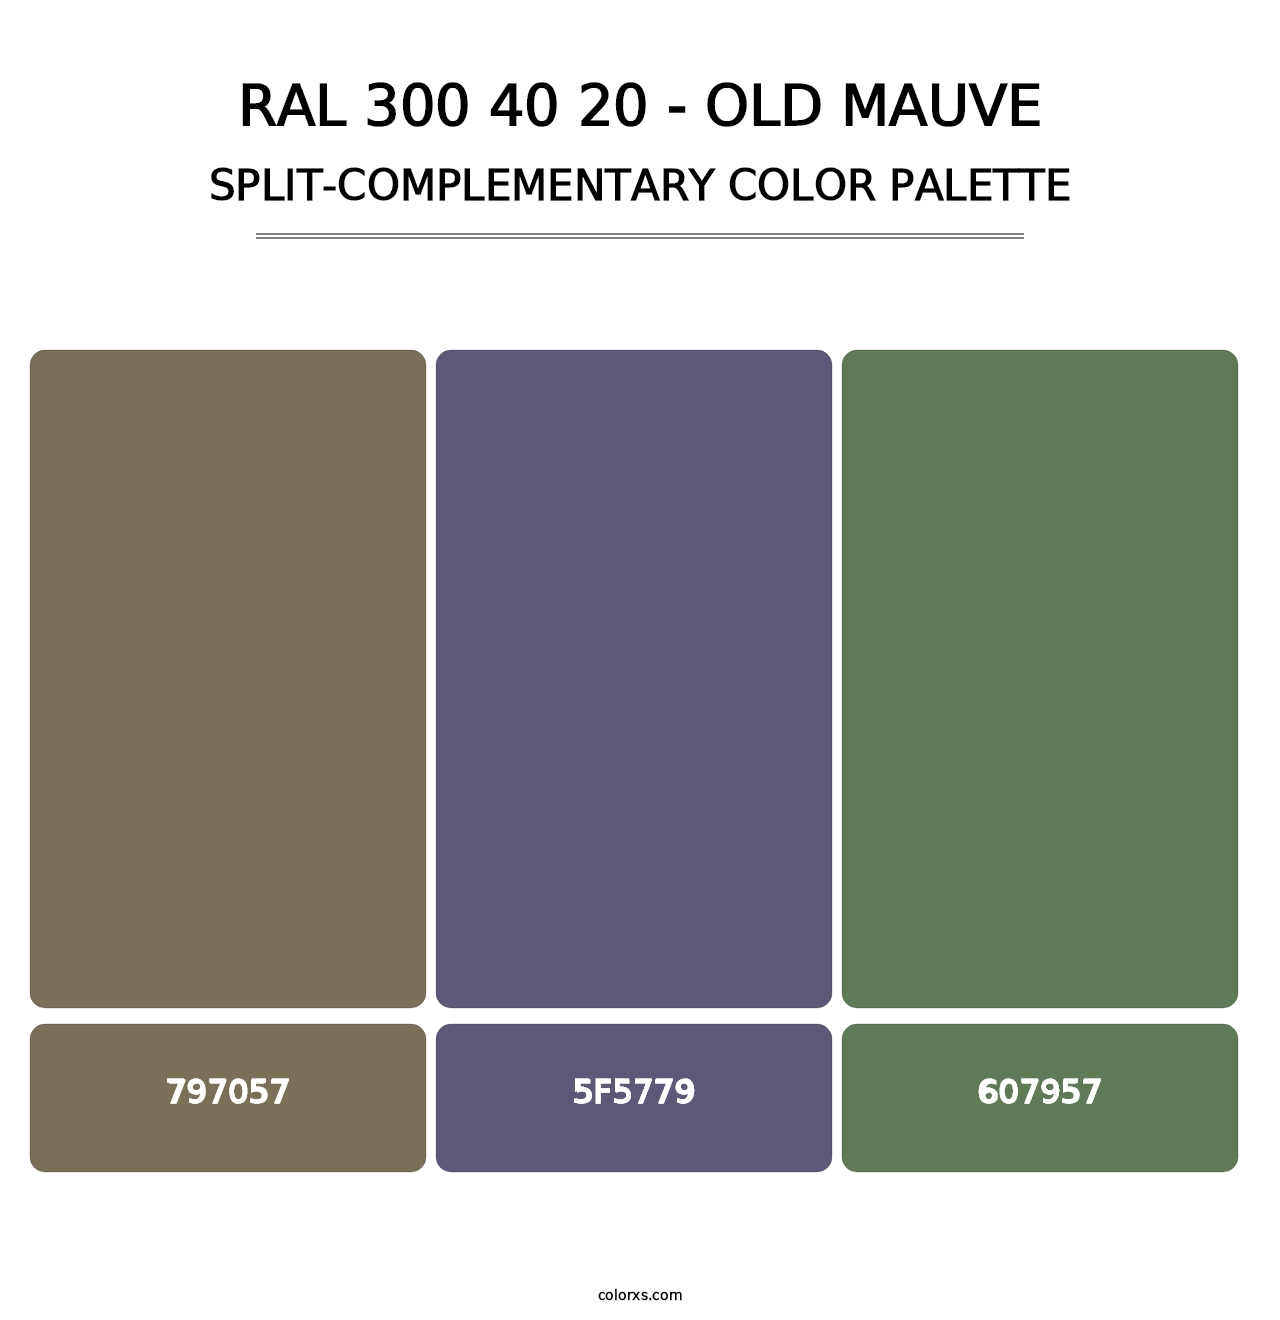 RAL 300 40 20 - Old Mauve - Split-Complementary Color Palette